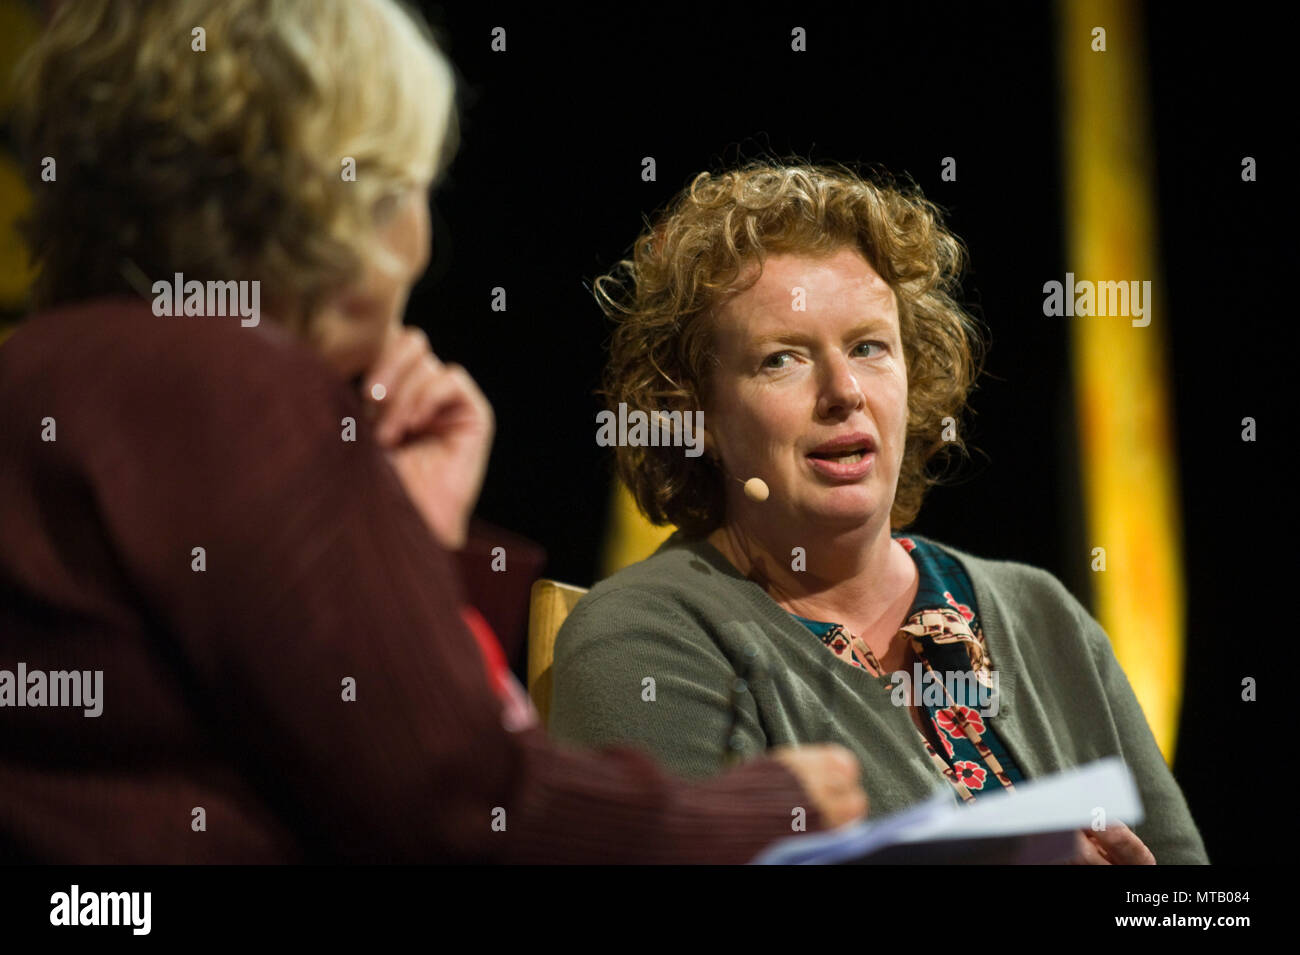 Suzanne O'Sullivan neurologist speaking to Rosie Boycott on stage at Hay Festival 2018 Hay-on-Wye Powys Wales UK Stock Photo